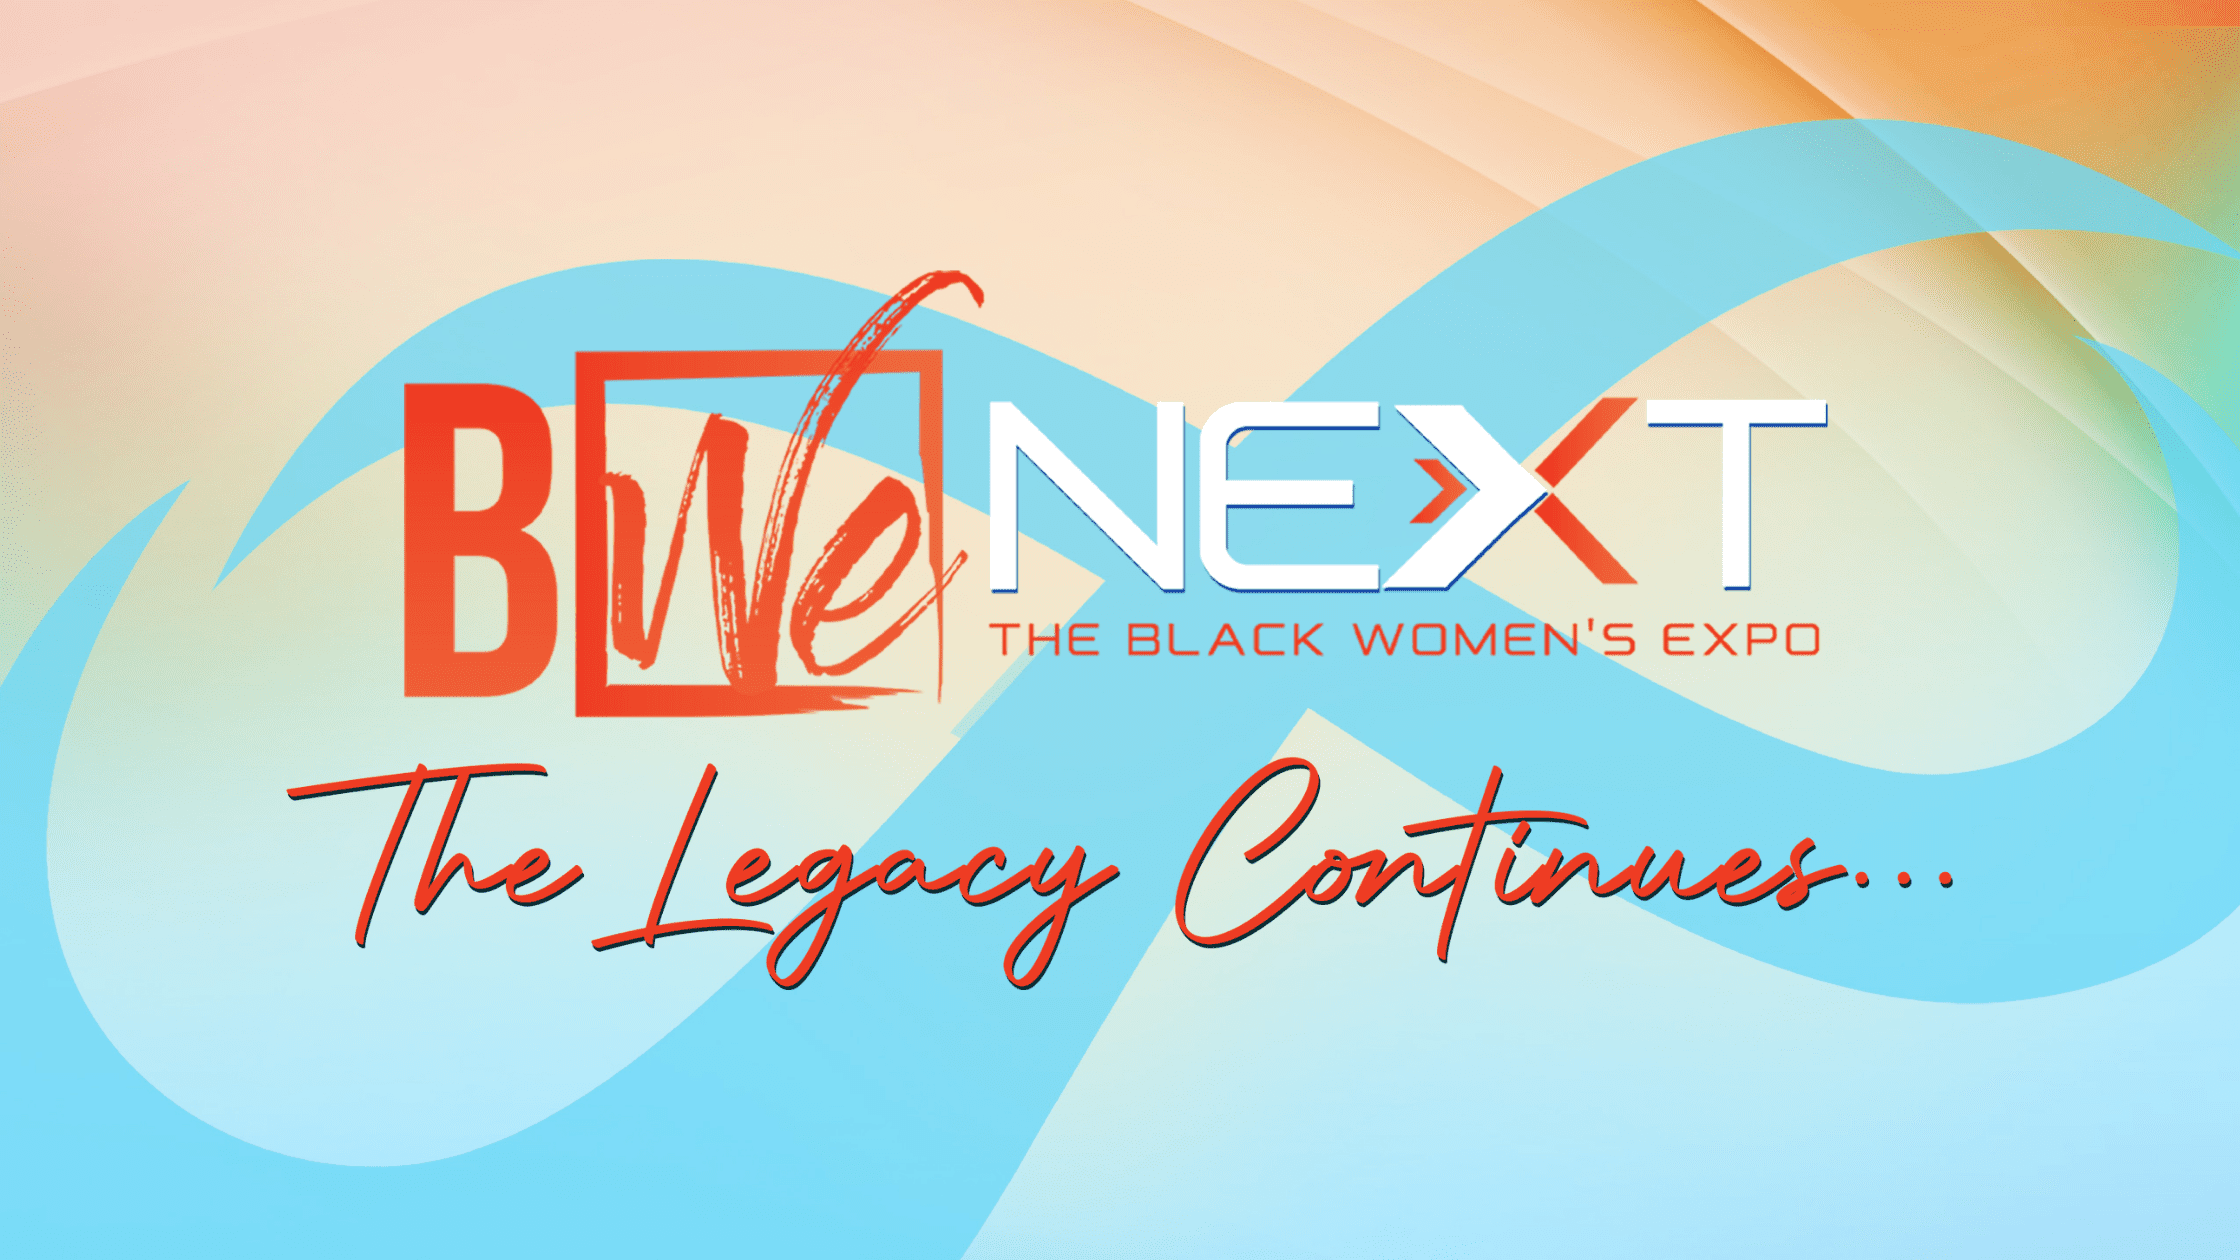 BWeNext 2023 The Black Women's Expo Chicago, Atlanta and DMV